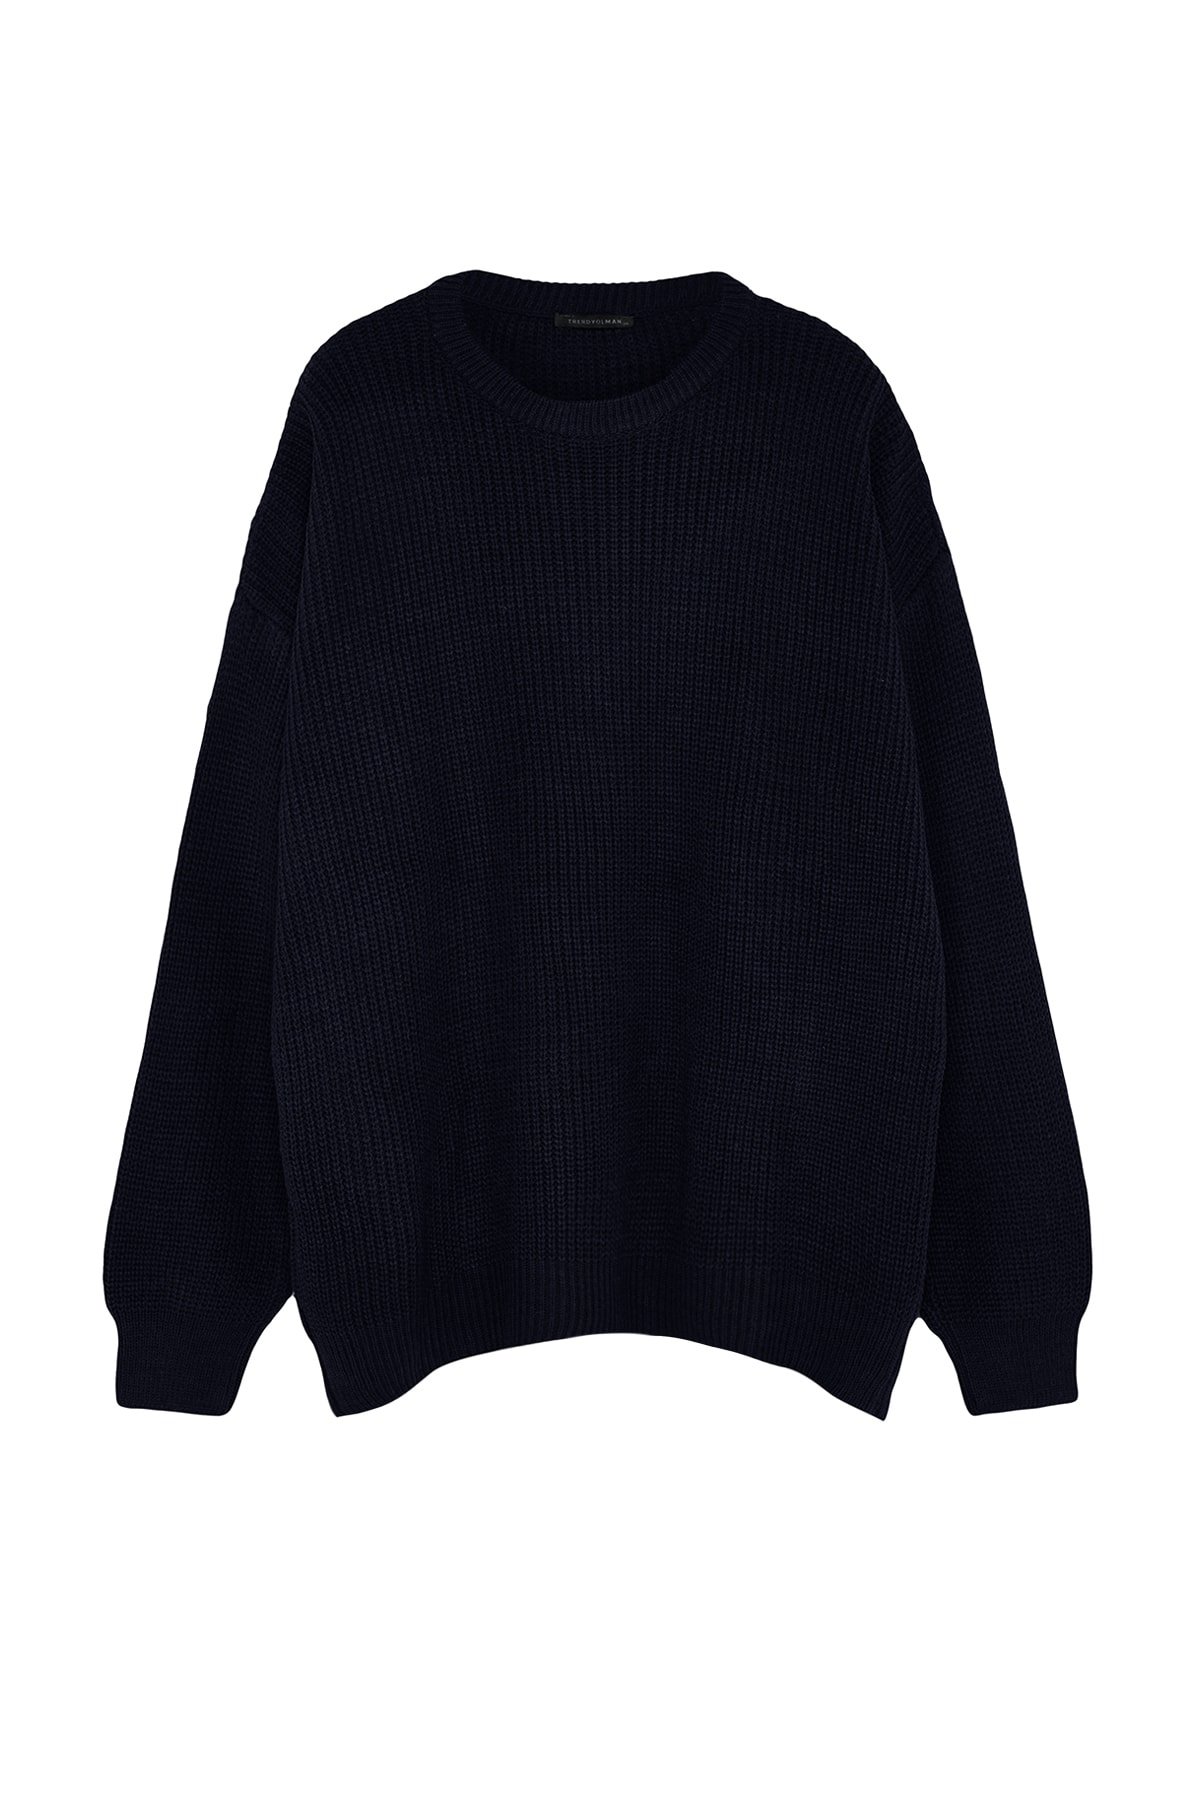 Trendyol Navy Blue Plus Size Oversize Fit Wide Fit Crew Neck Basic Knitwear Sweater